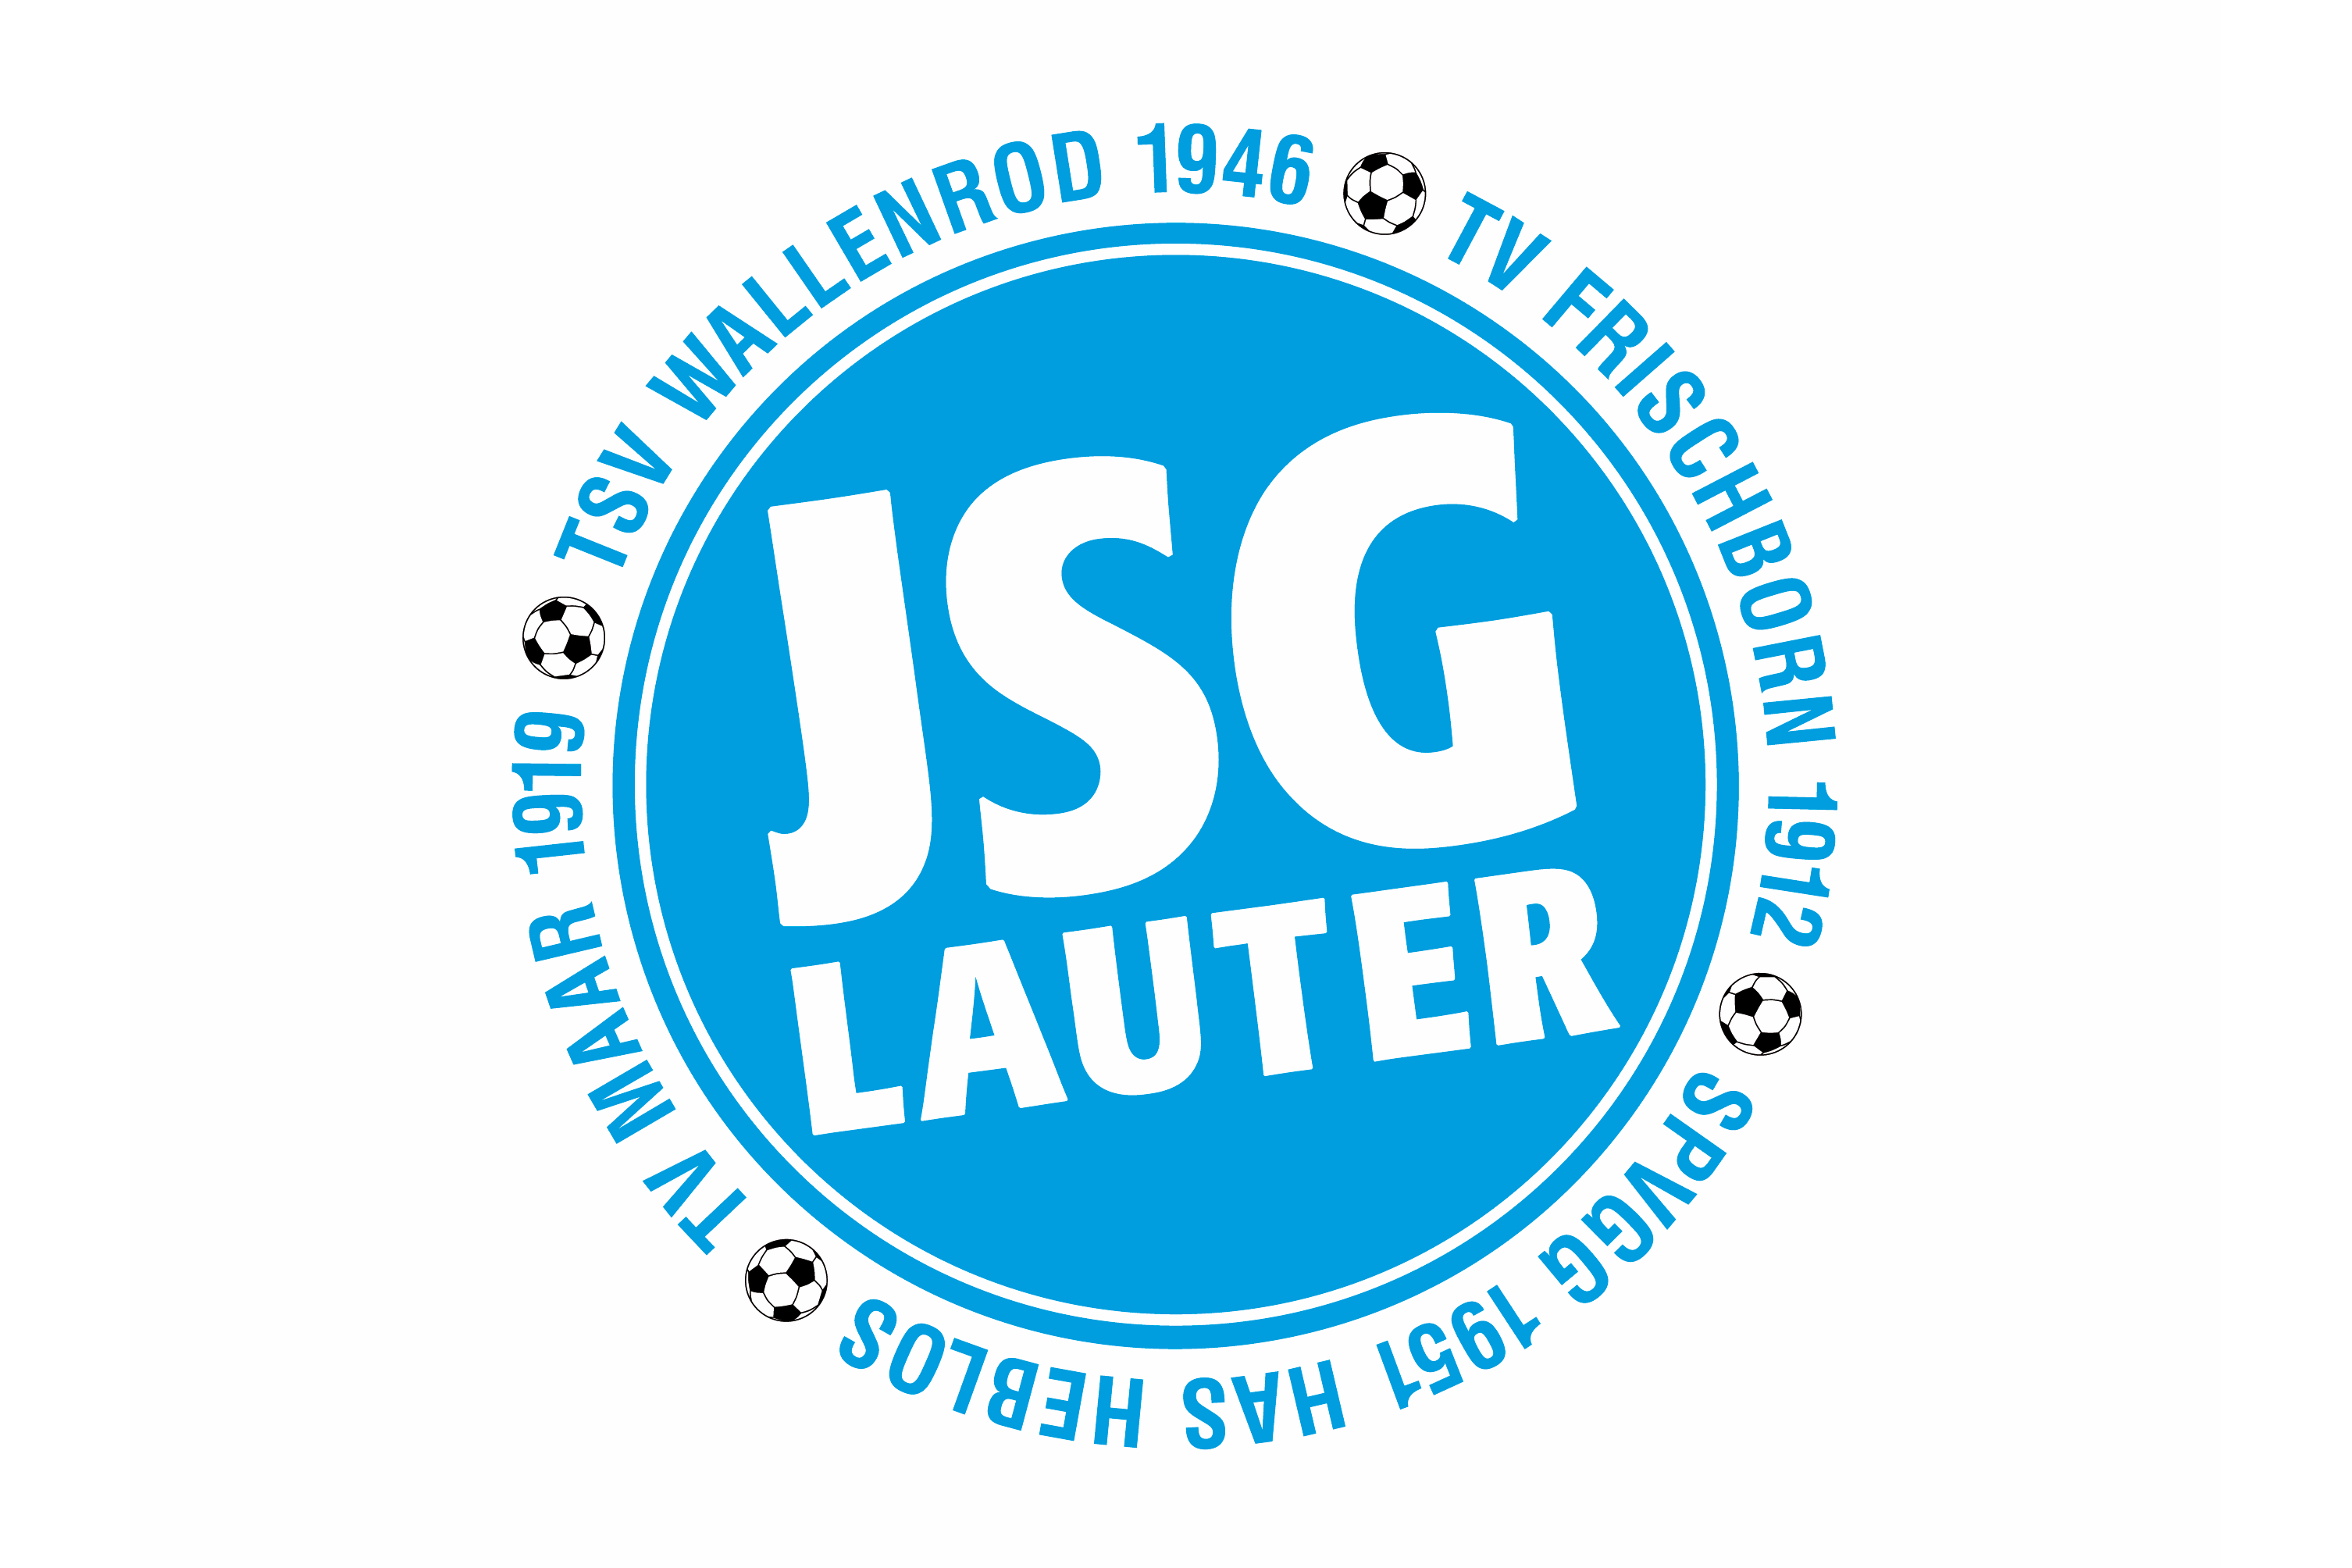 Neuer Multifunktionsgrill bei der JSG Lauter